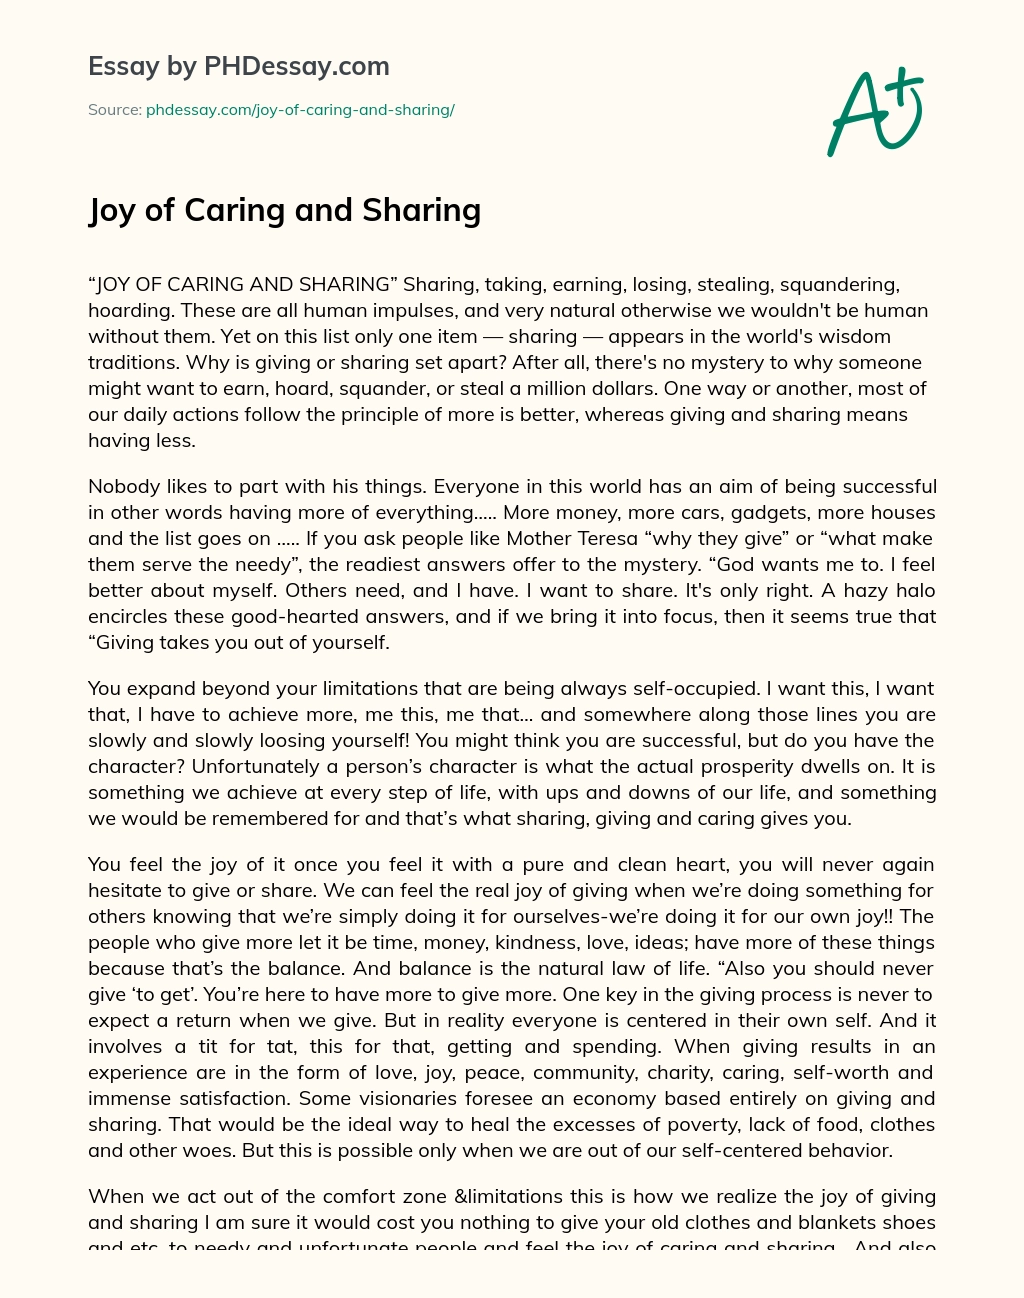 Joy of Caring and Sharing essay